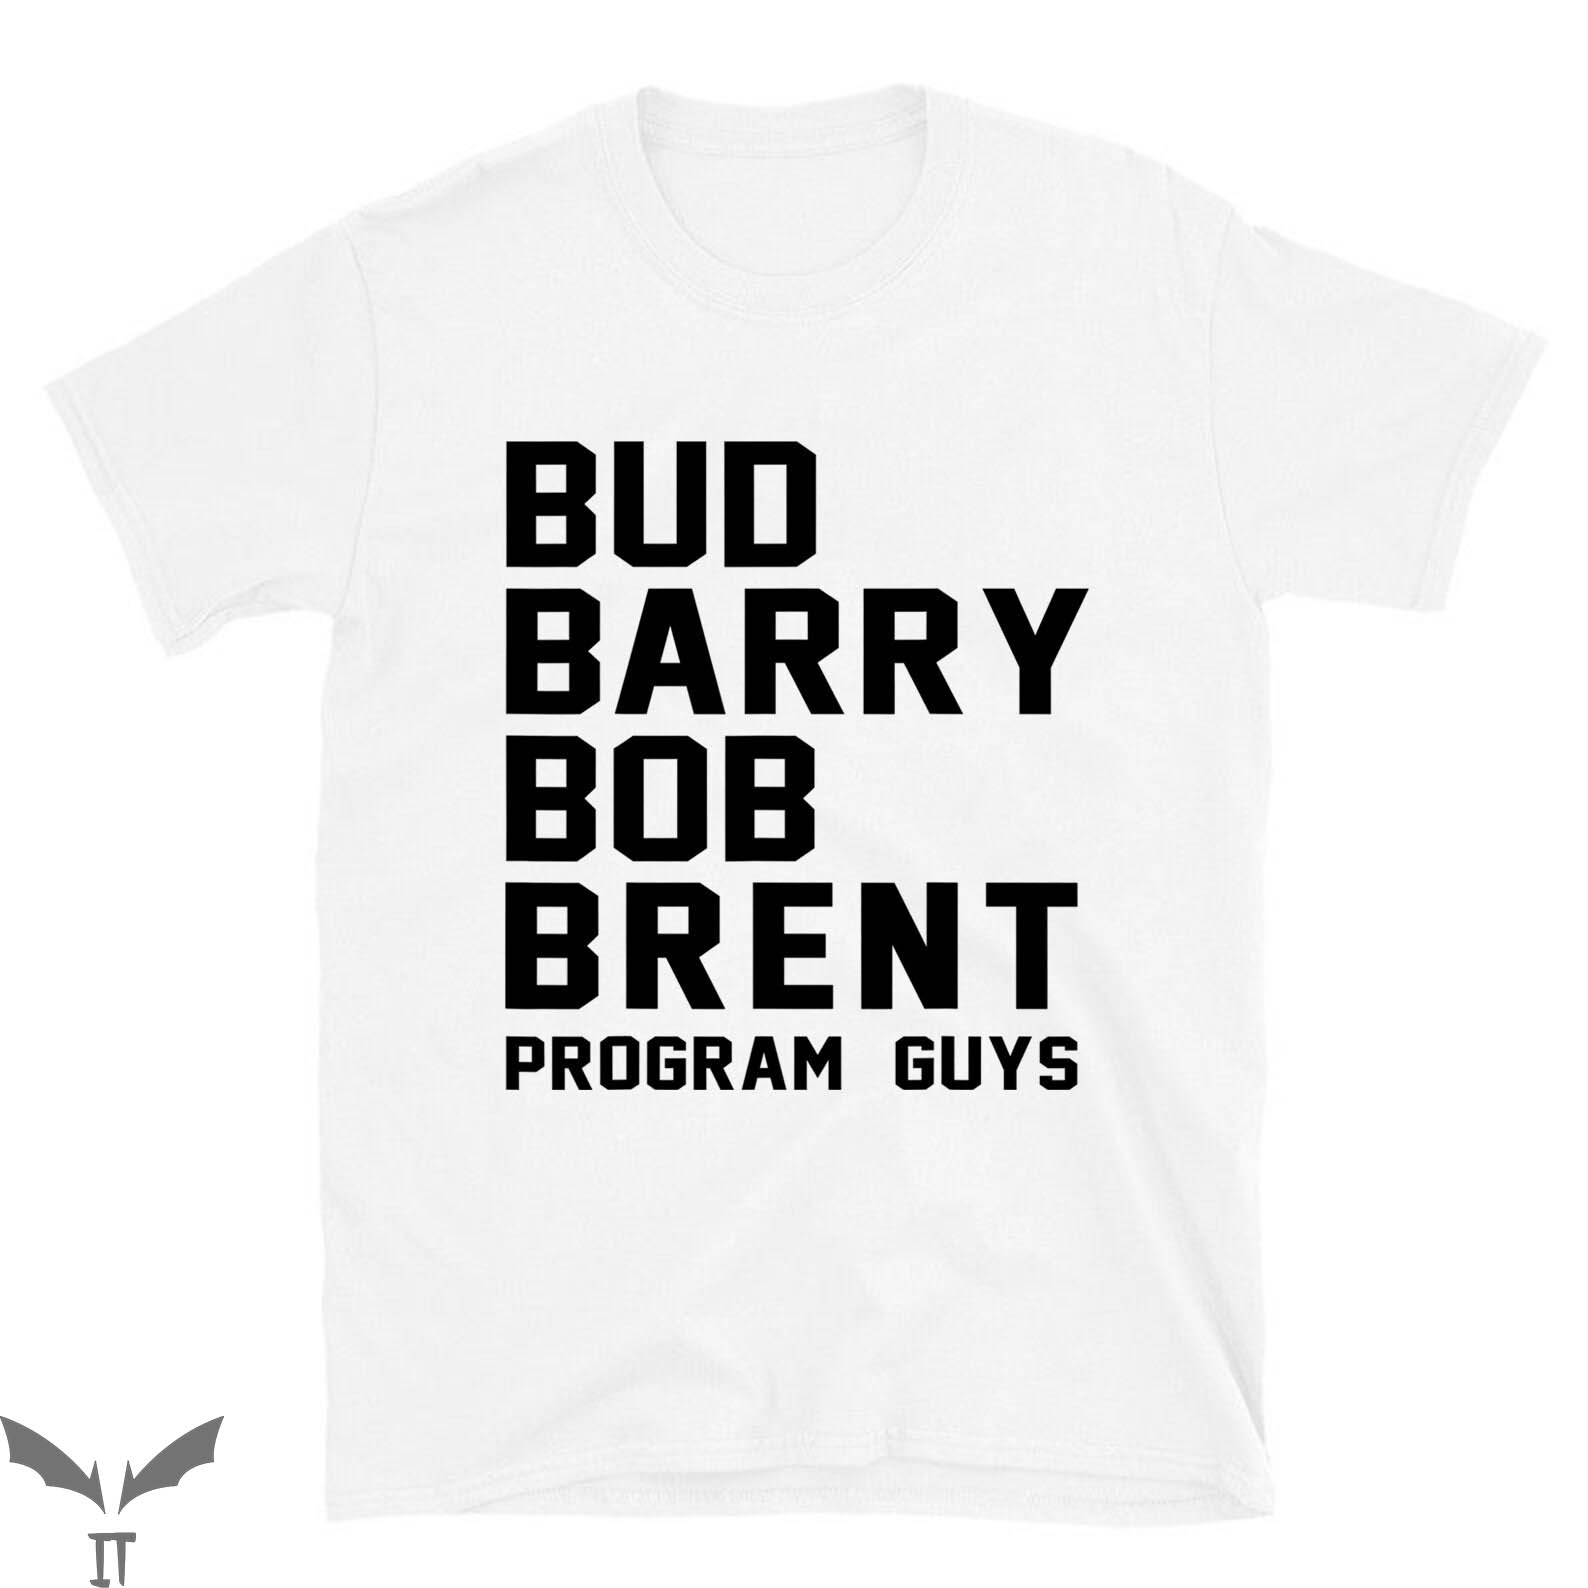 Bud Barry Bob Brent T-Shirt Cool Design Trendy Graphic Shirt